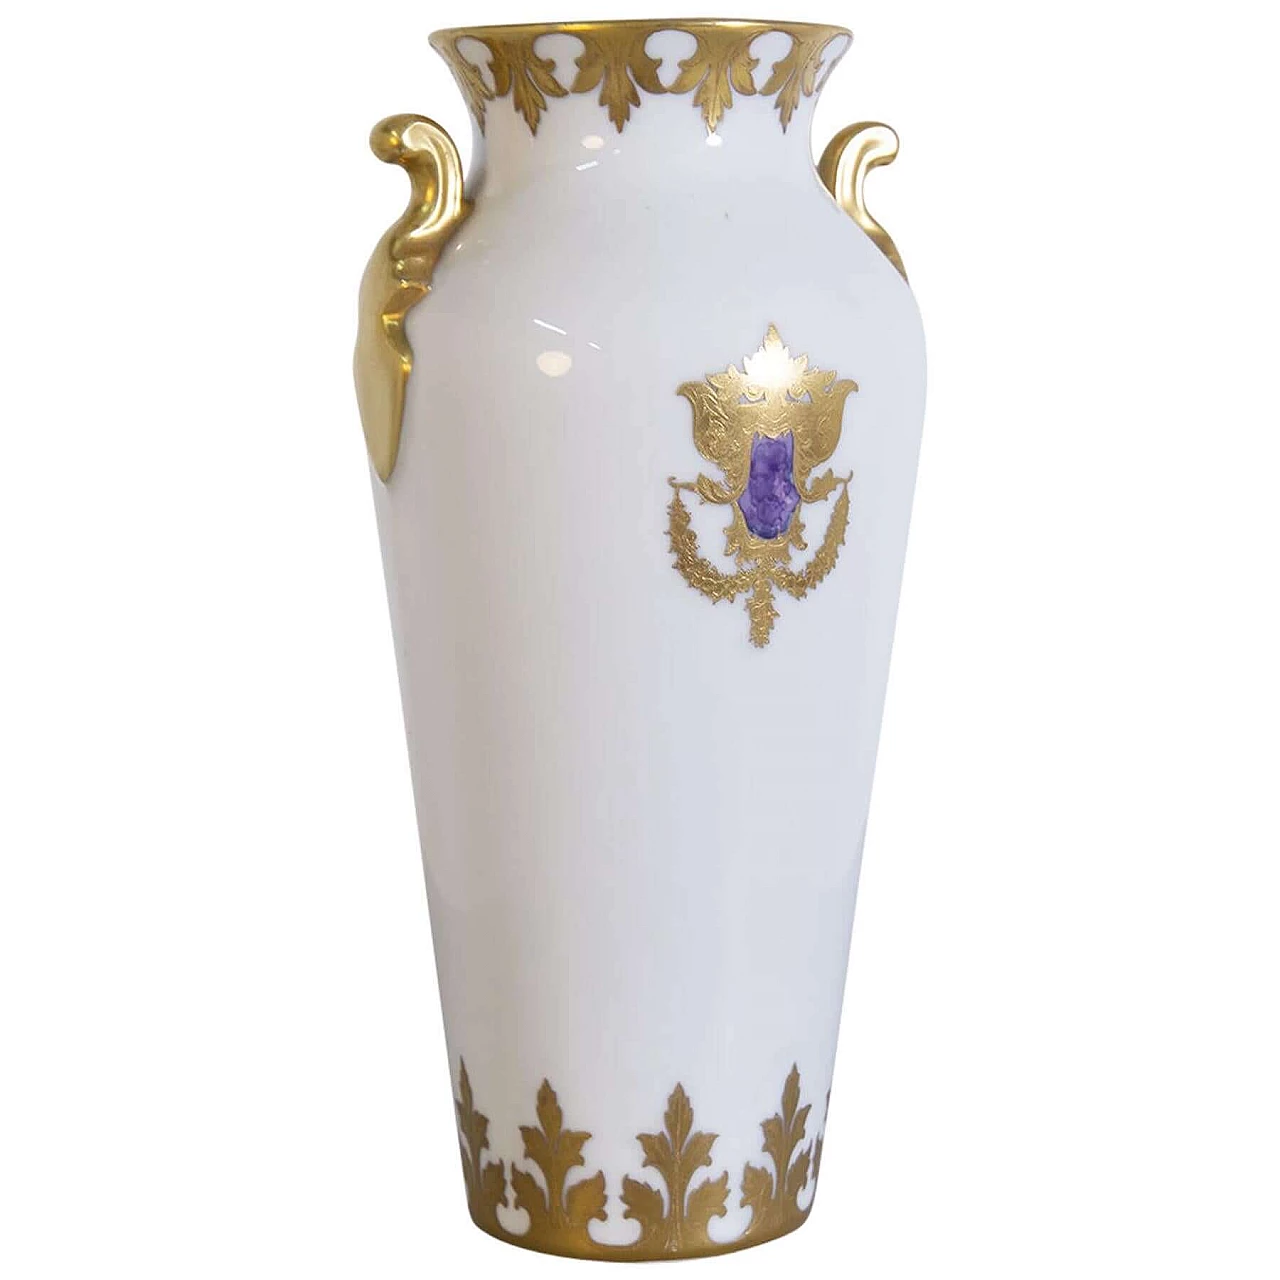 Arrigo Finzi's porcelain vase, painted in gold, 1950s 1408461